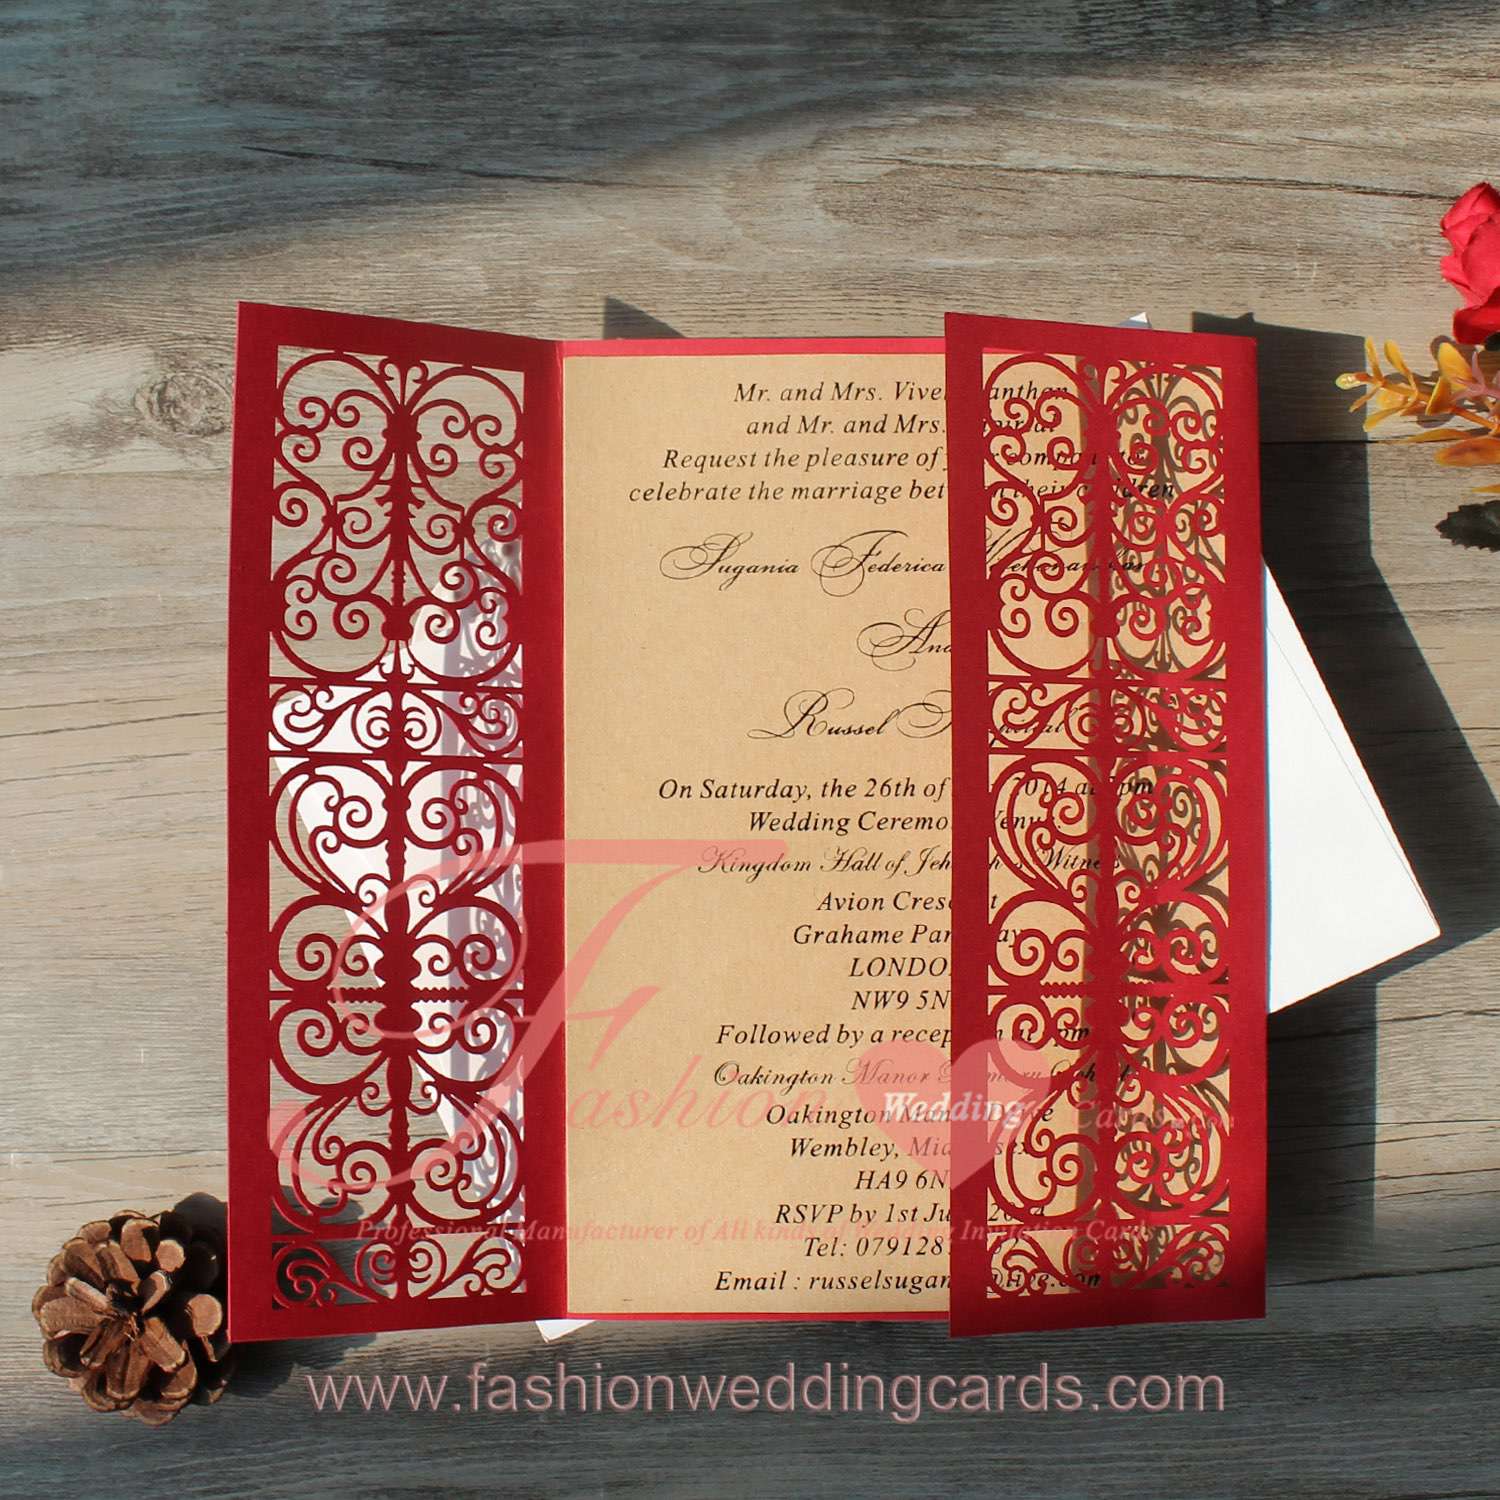 Elegant Red Laser Cut Out Wedding Invitations Design